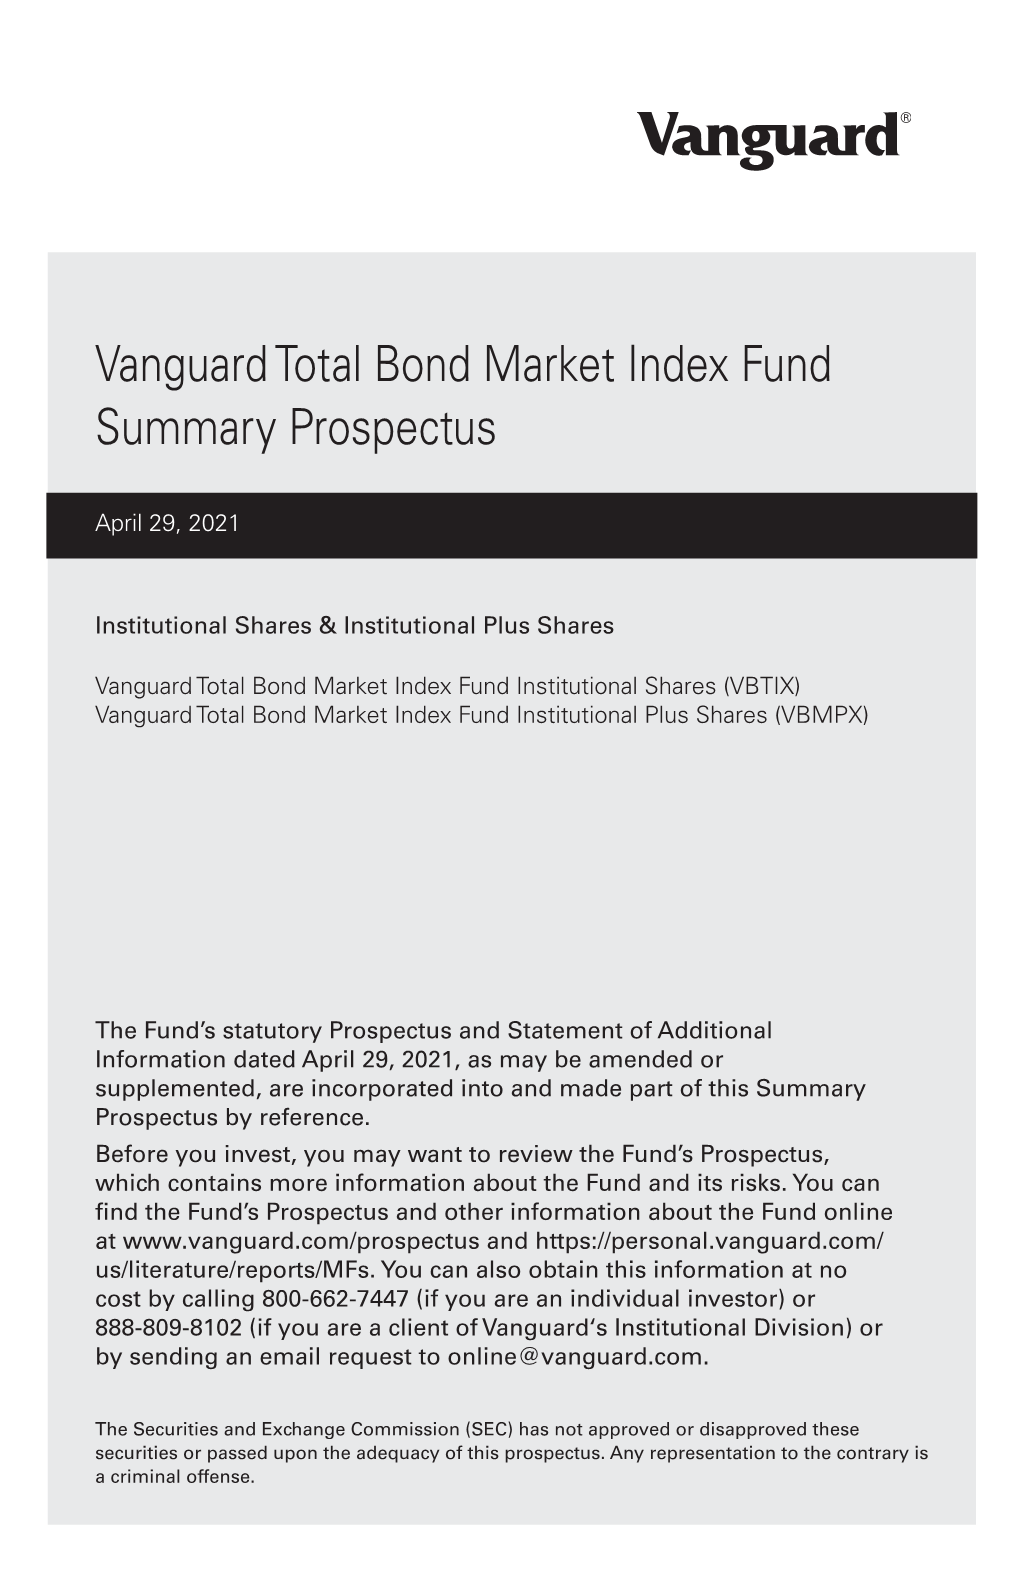 Vanguard Total Bond Market Index Fund Summary Prospectus